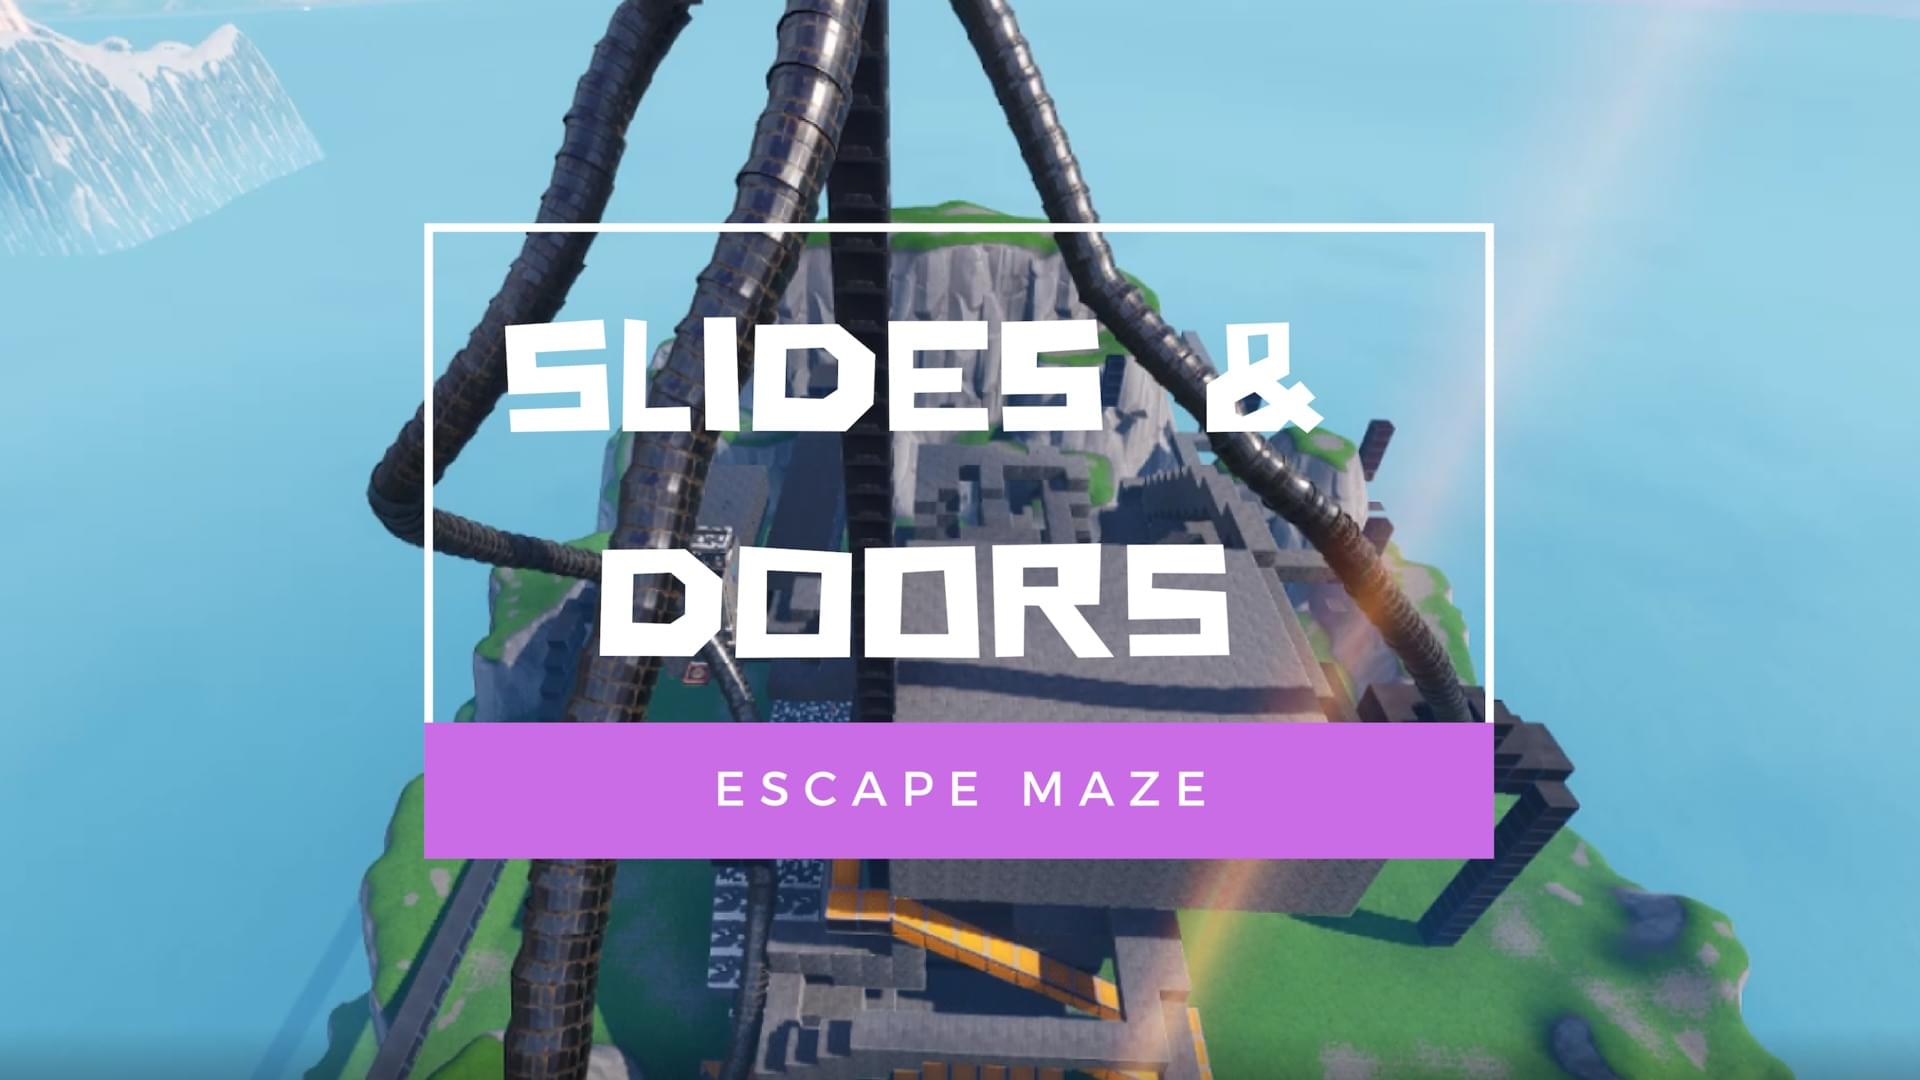 fortnite creative slides doors escape maze - fortnite slides and doors maze